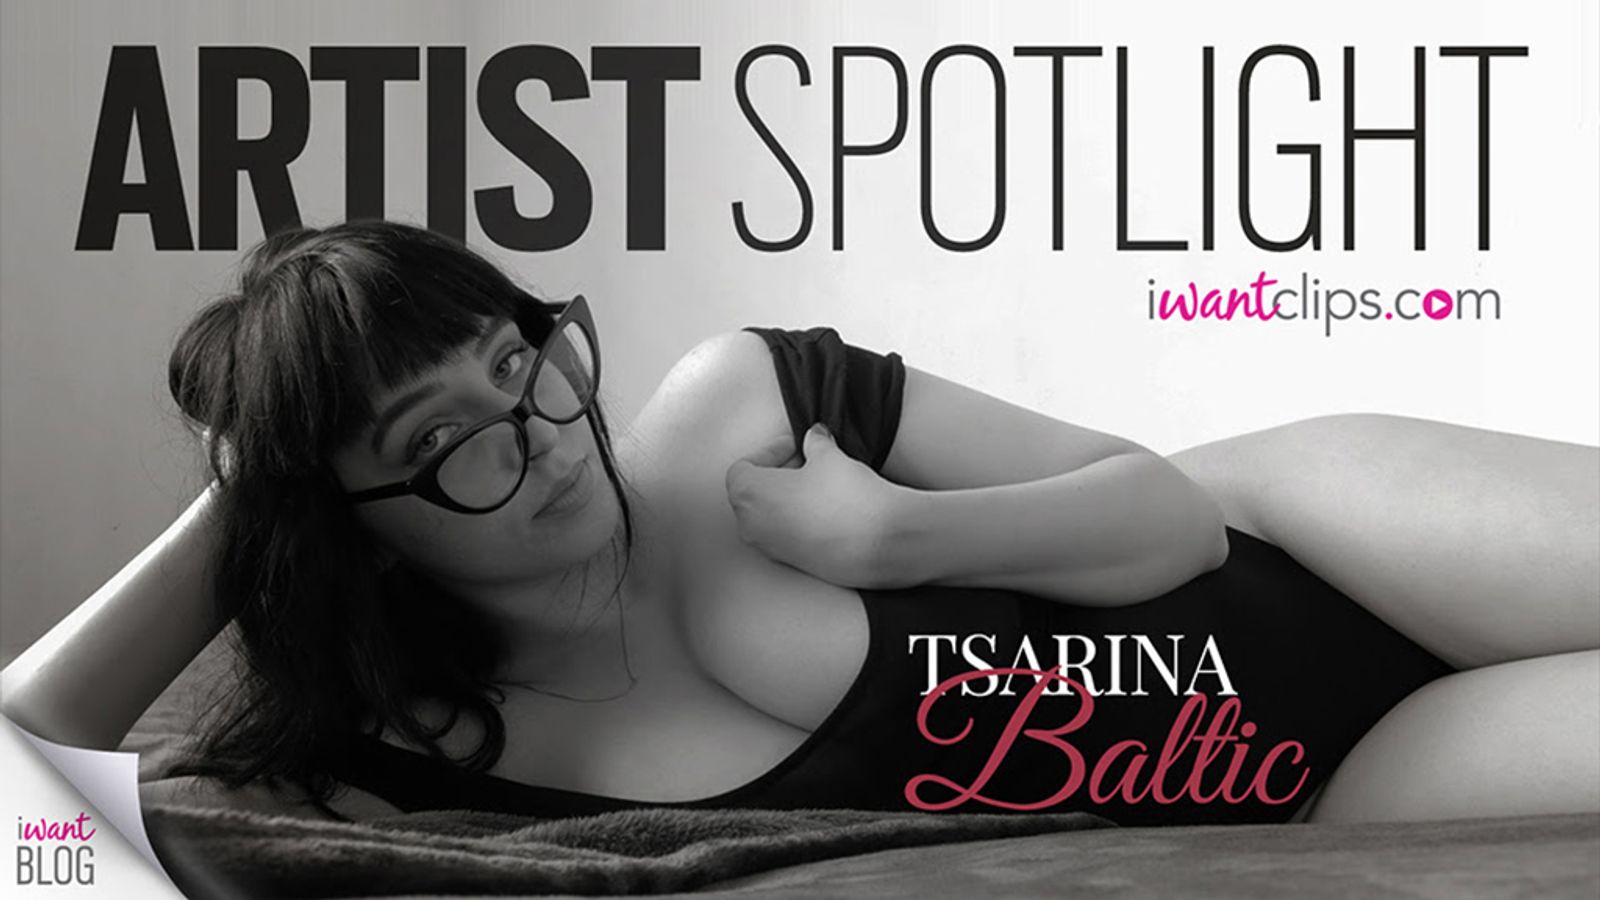 Tsarina Baltic Featured In New iWantClips’ Artist Spotlight